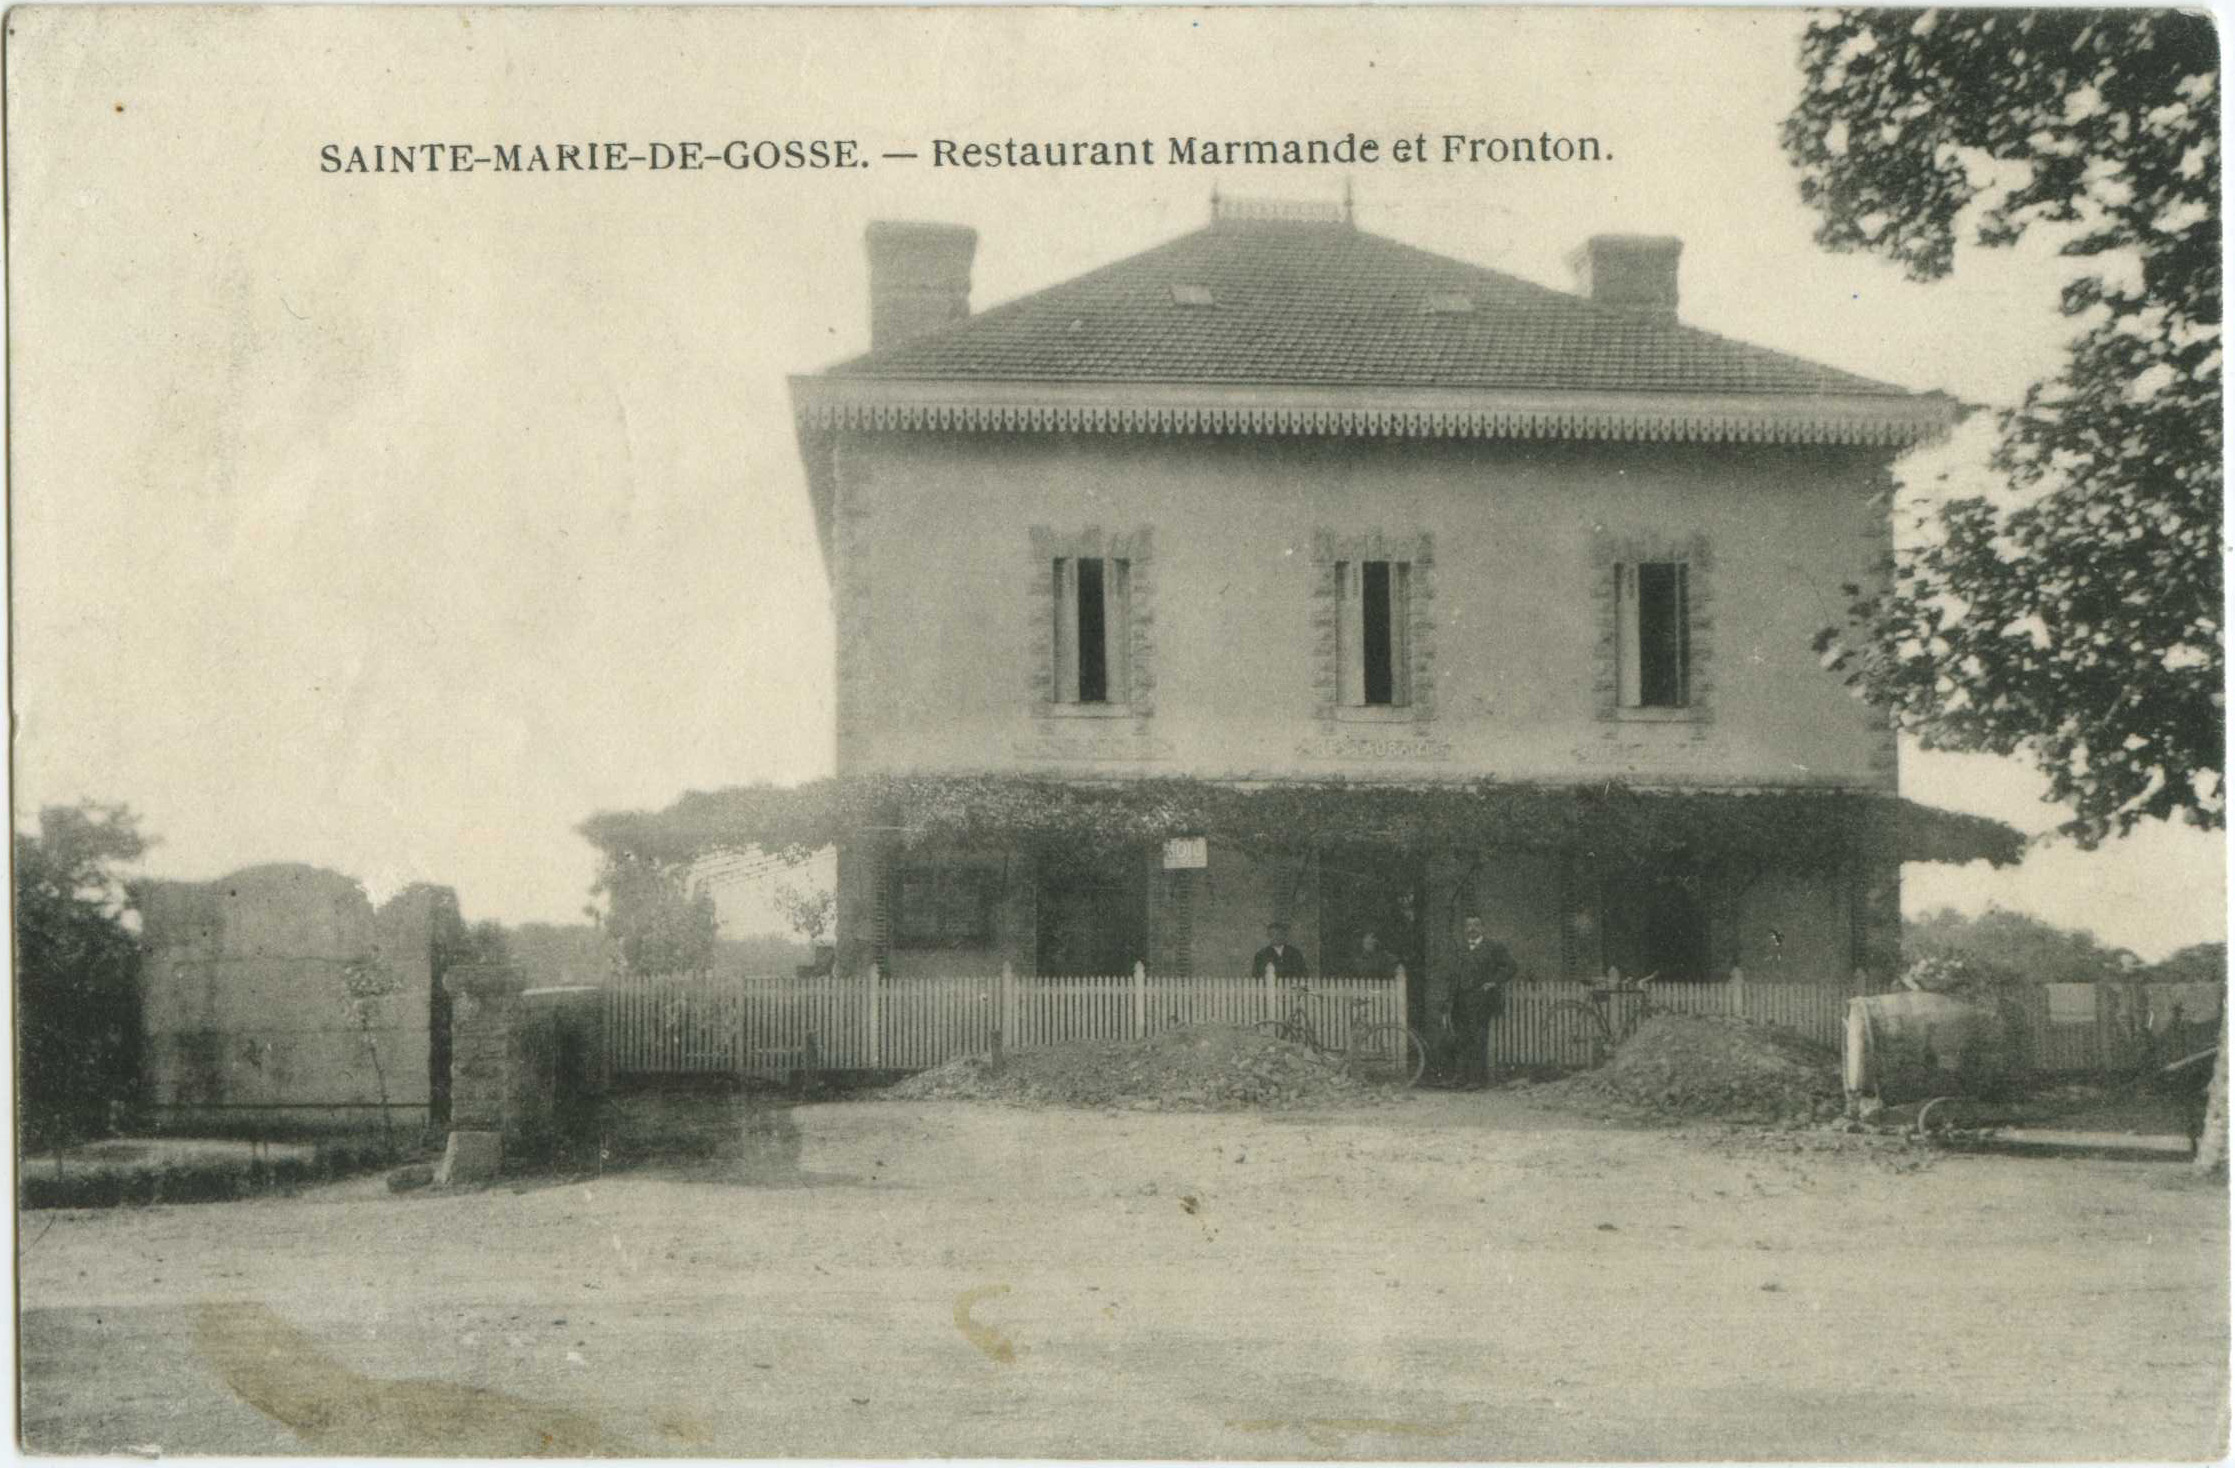 Sainte-Marie-de-Gosse - Restaurant Marmande et Fronton.